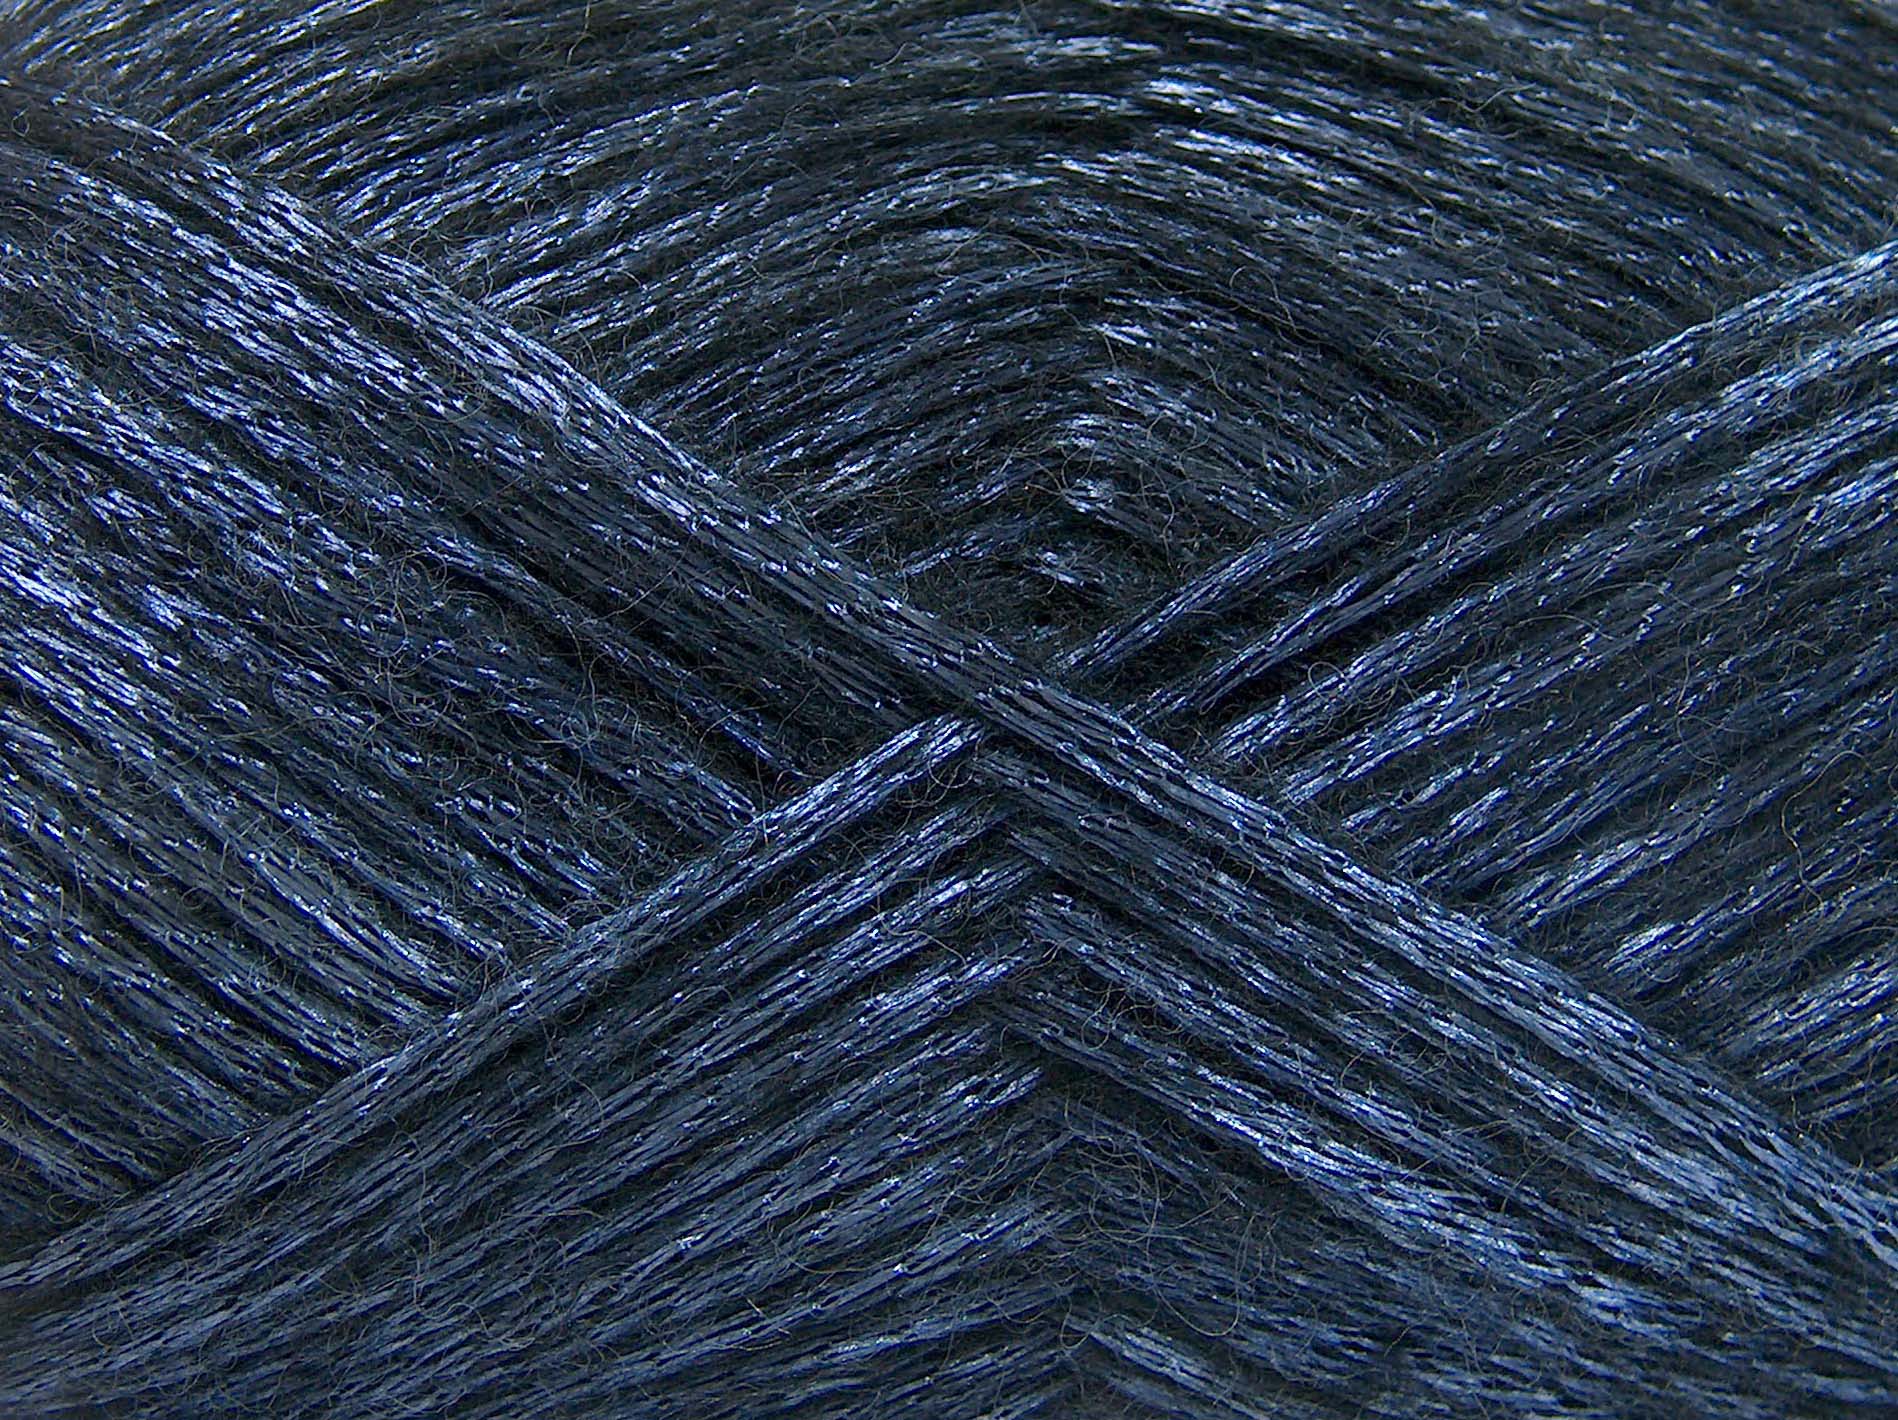 Pelini 24 - Black — Wall of Yarn